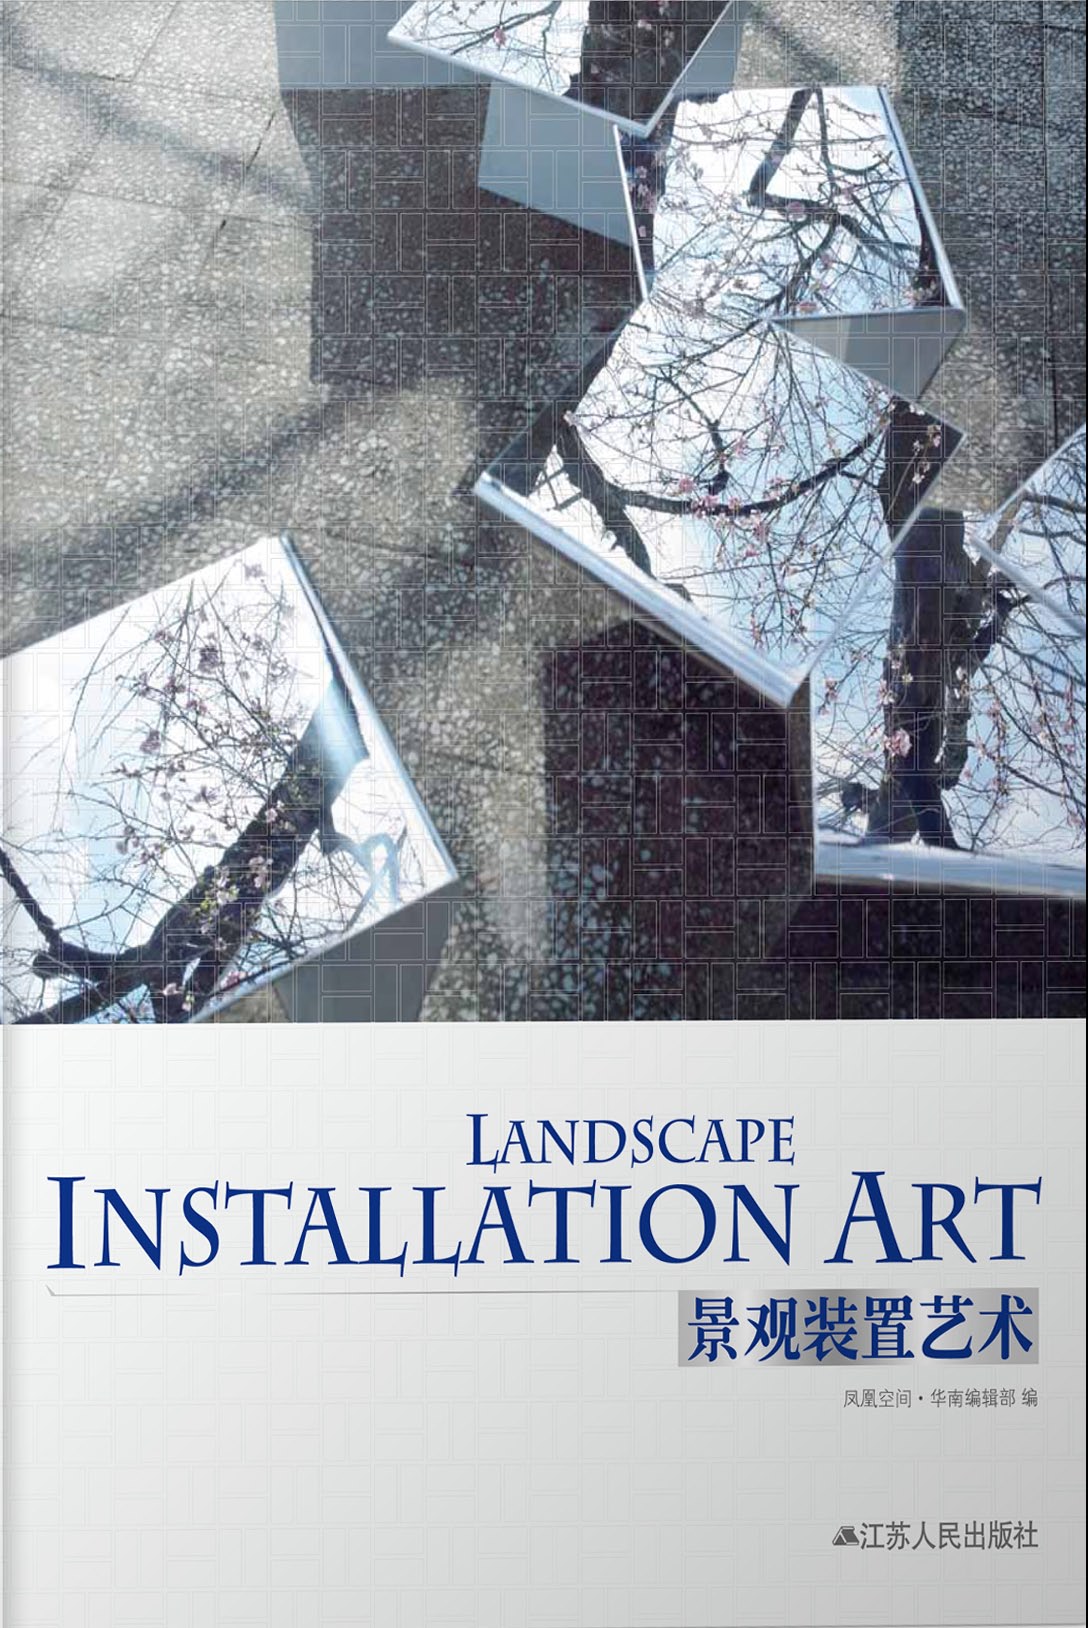 LANDSCAPE INSTALLATION ART